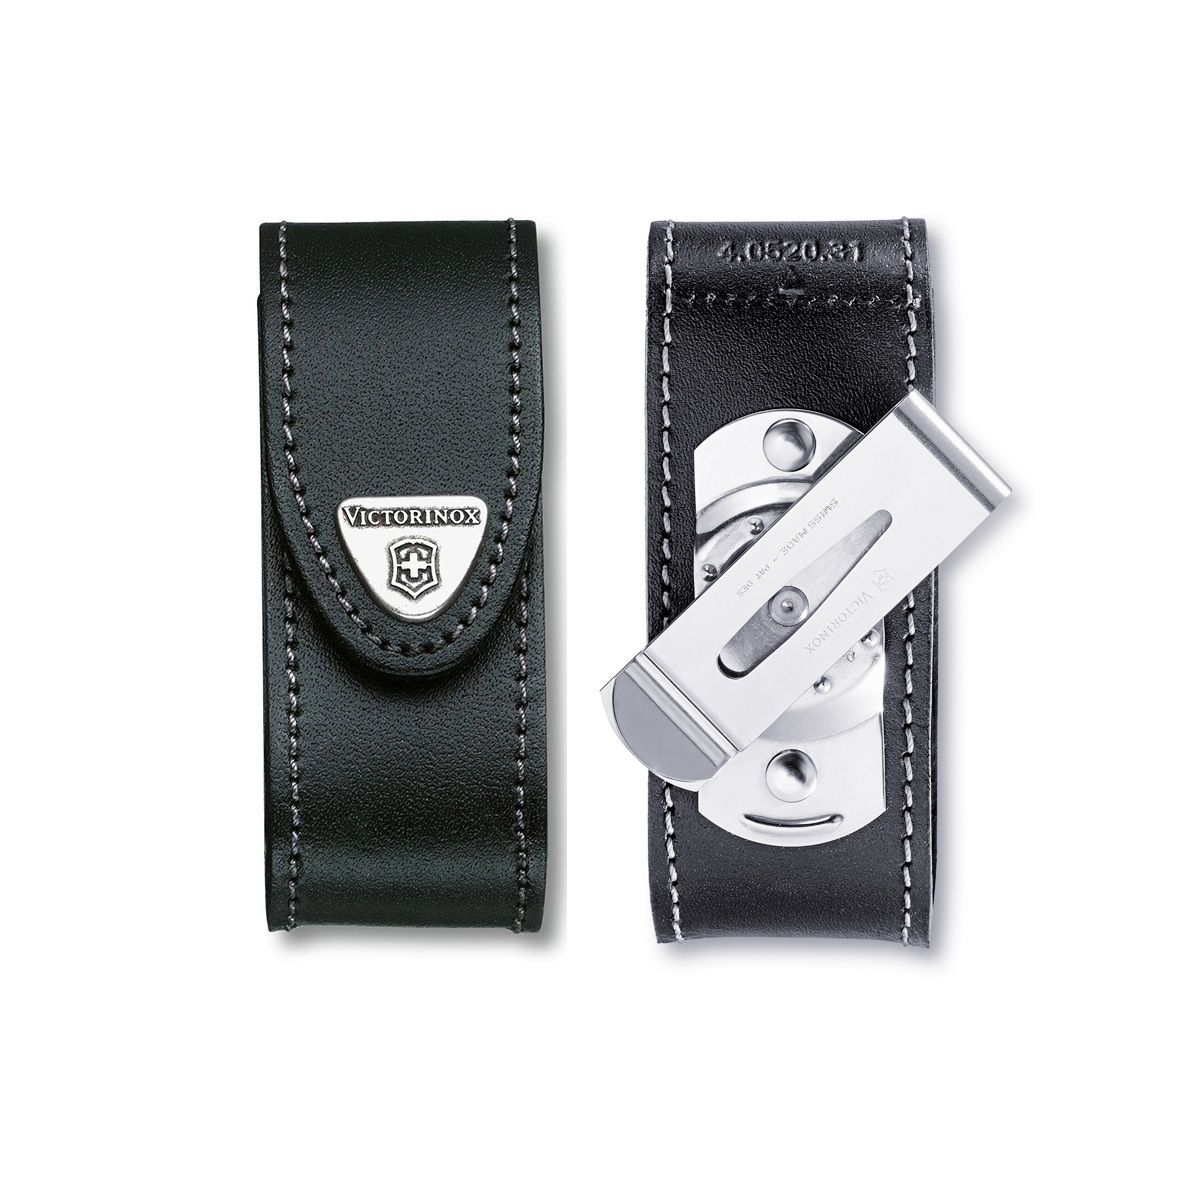 Чехол Victorinox Leather Belt Pouch до 4х рядов, черный, кожа - фото 1